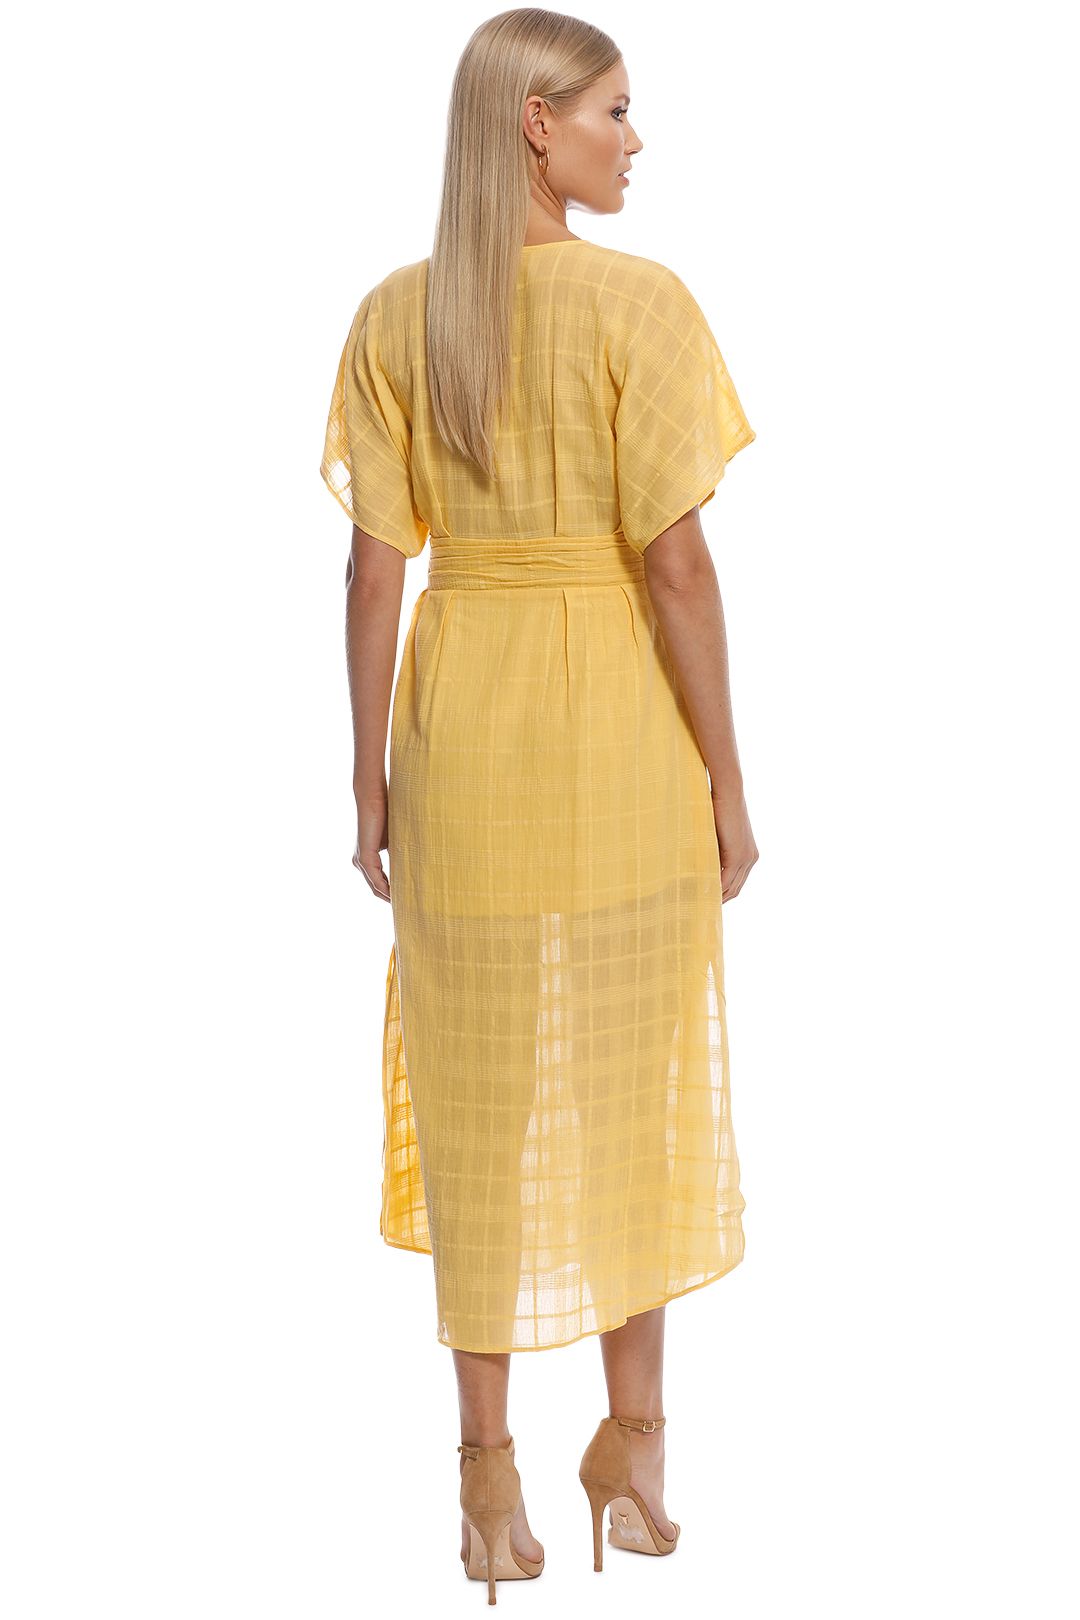 Suboo - Morning Light Ruffled Midi Dress - Yellow - Back